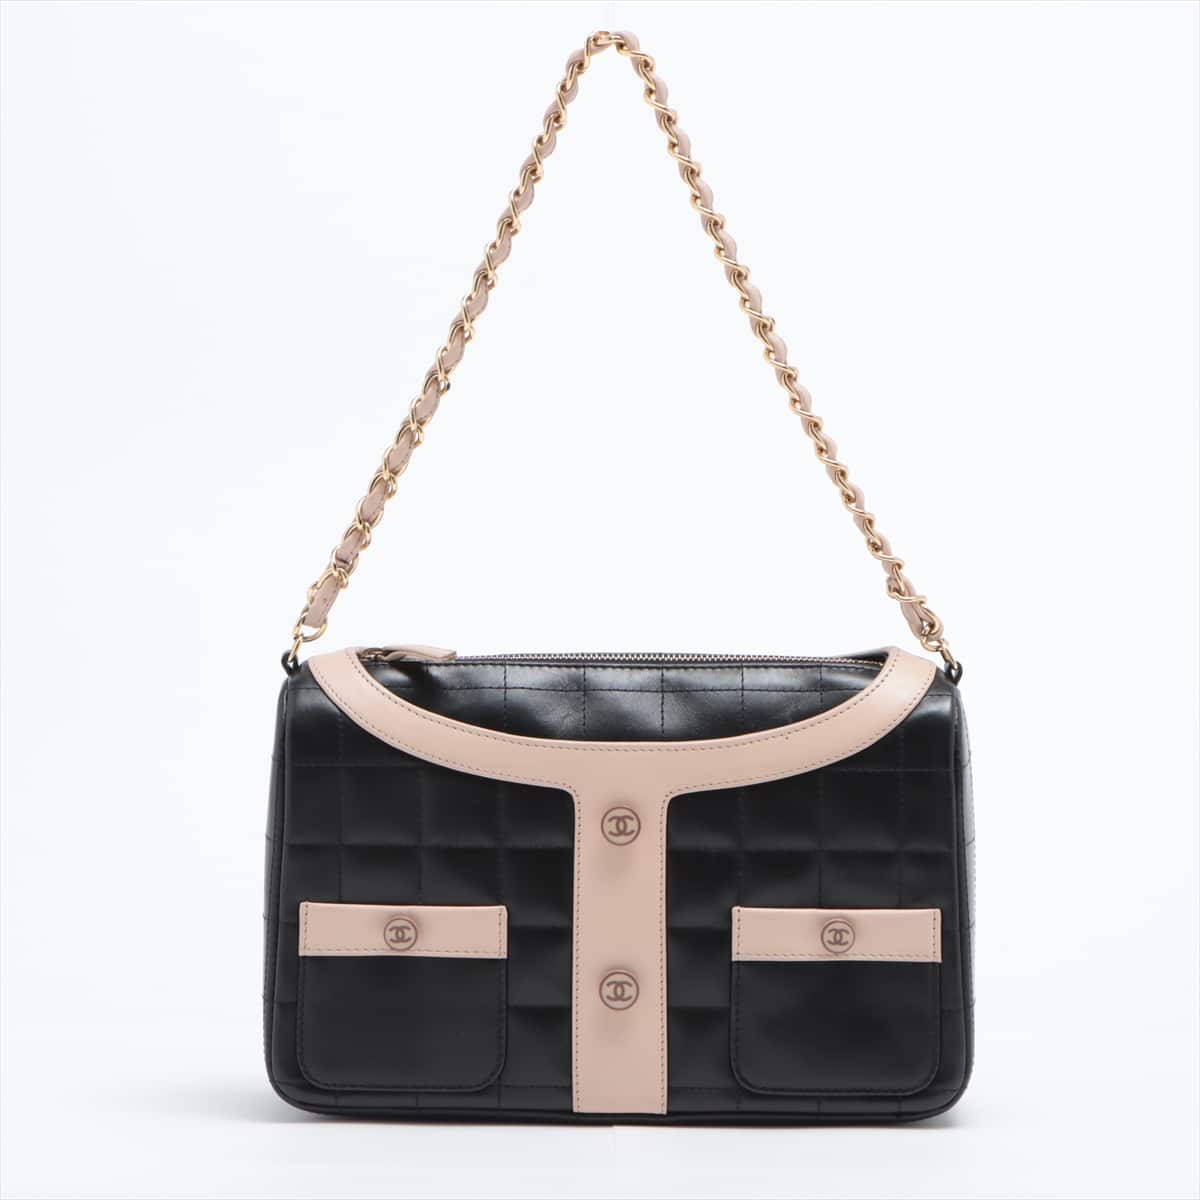 Chanel Girl Chanel Lambskin Chain handbag Black Gold Metal fittings 7XXXXXX